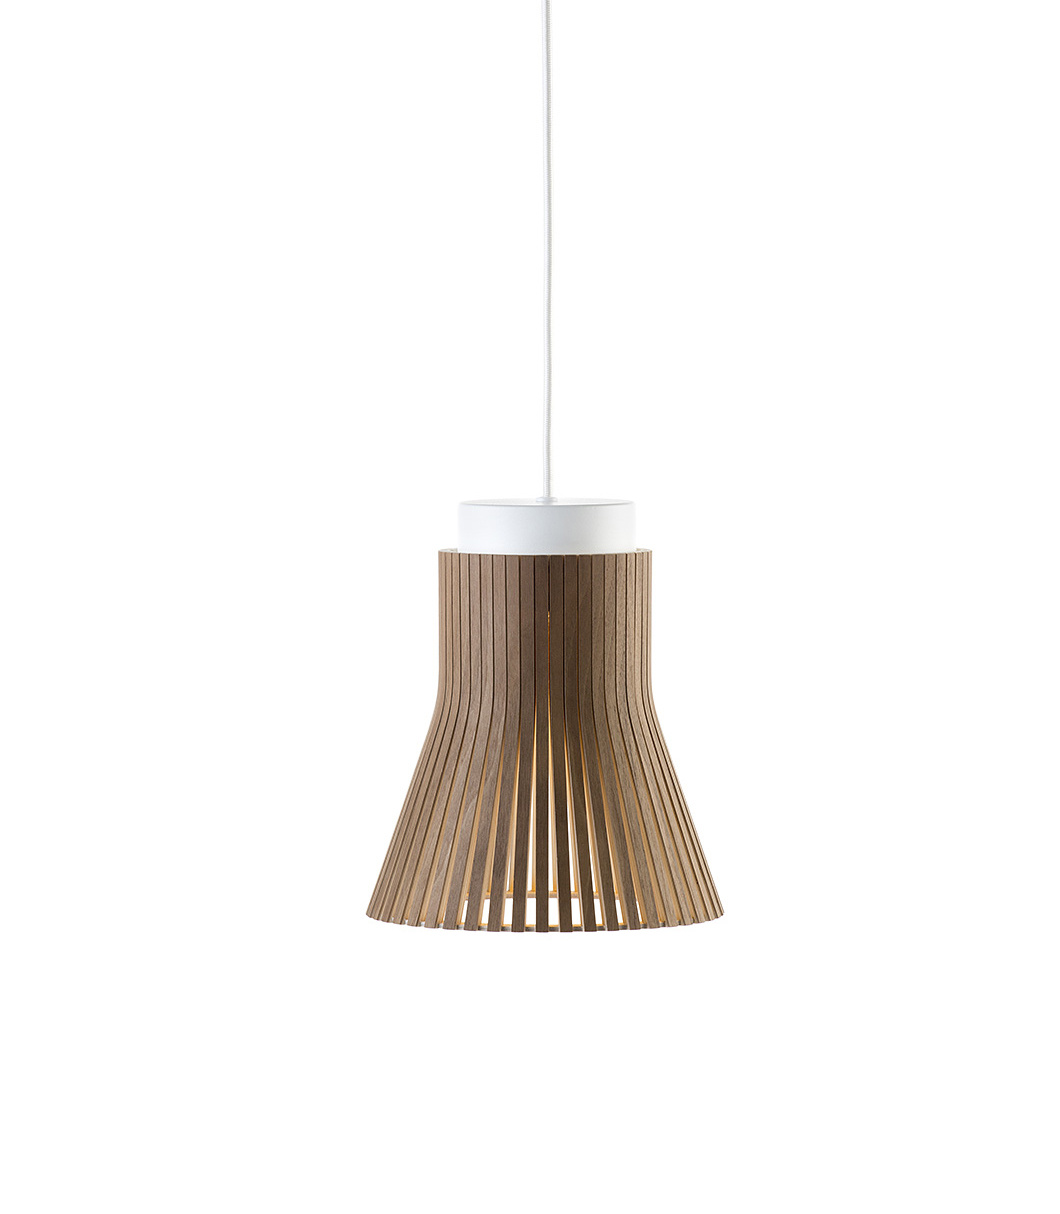 Petite 4600 pendant lamp is available in walnut veneer